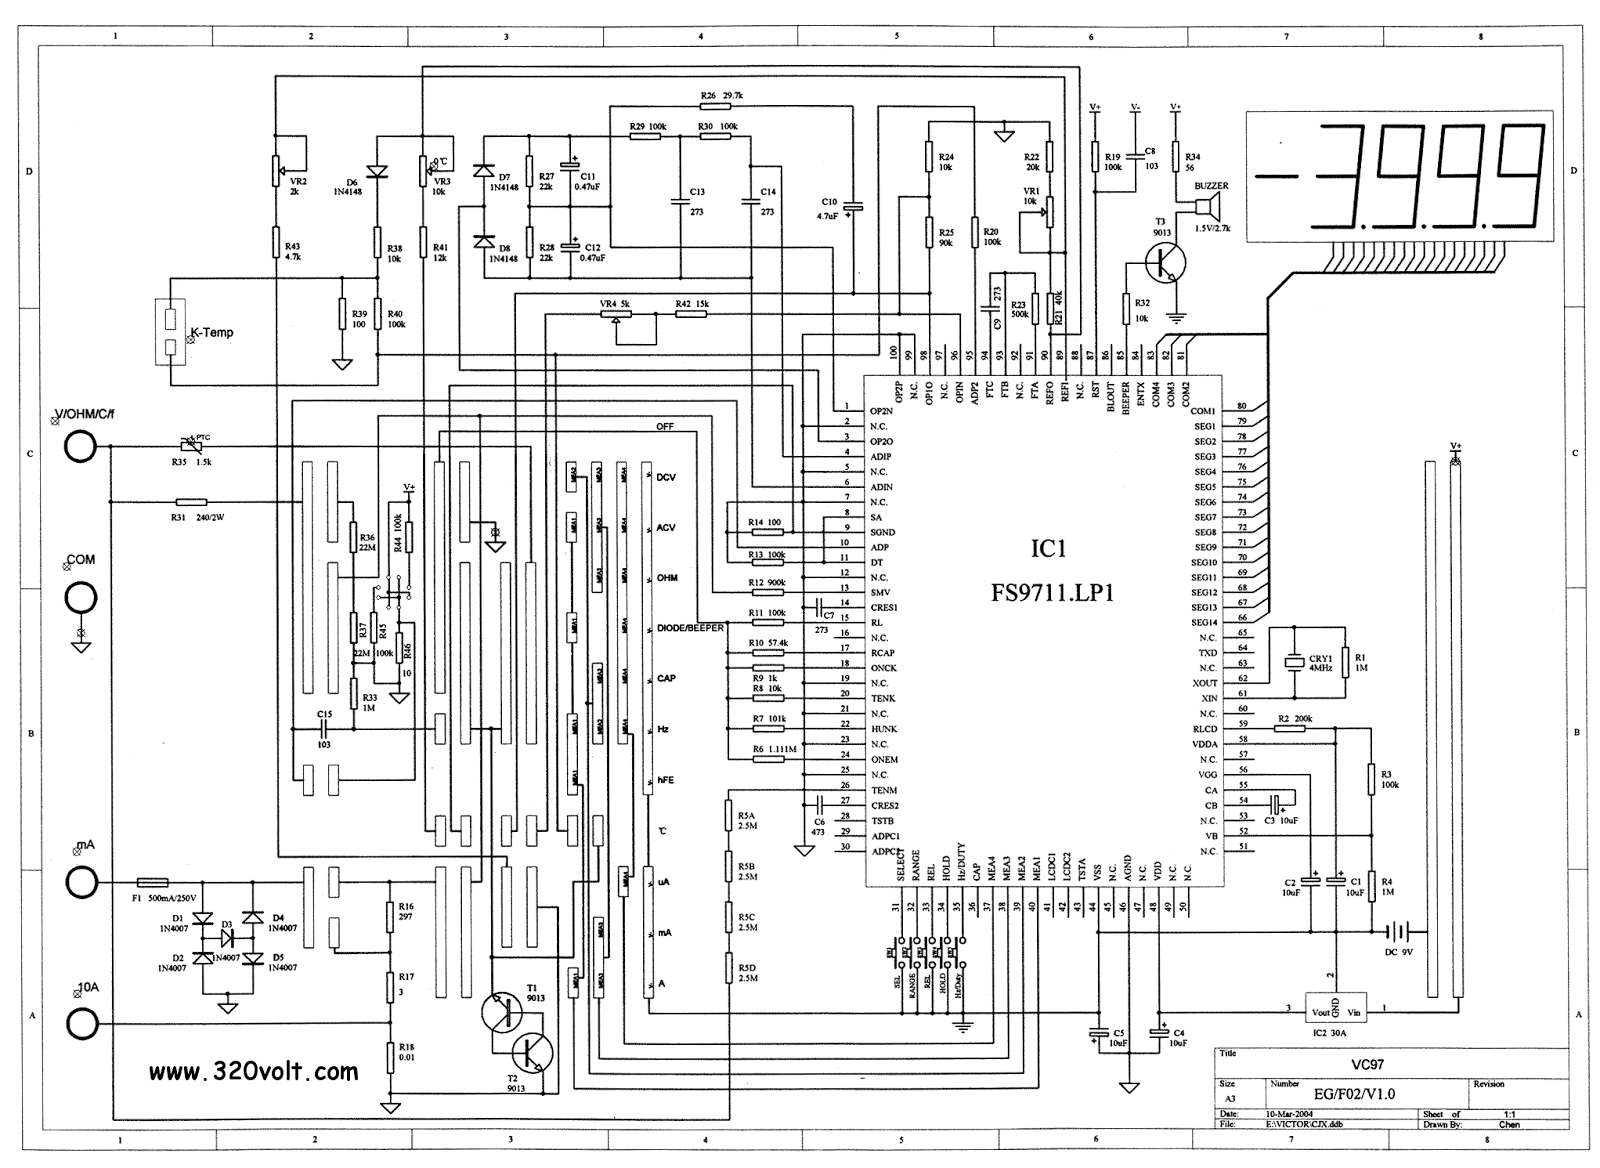 Esquema multimetro digital Hikari HM2090 (resolvido) Victor-VC97-multimeter-schema-vc97-circuit-fs97aa-lp1